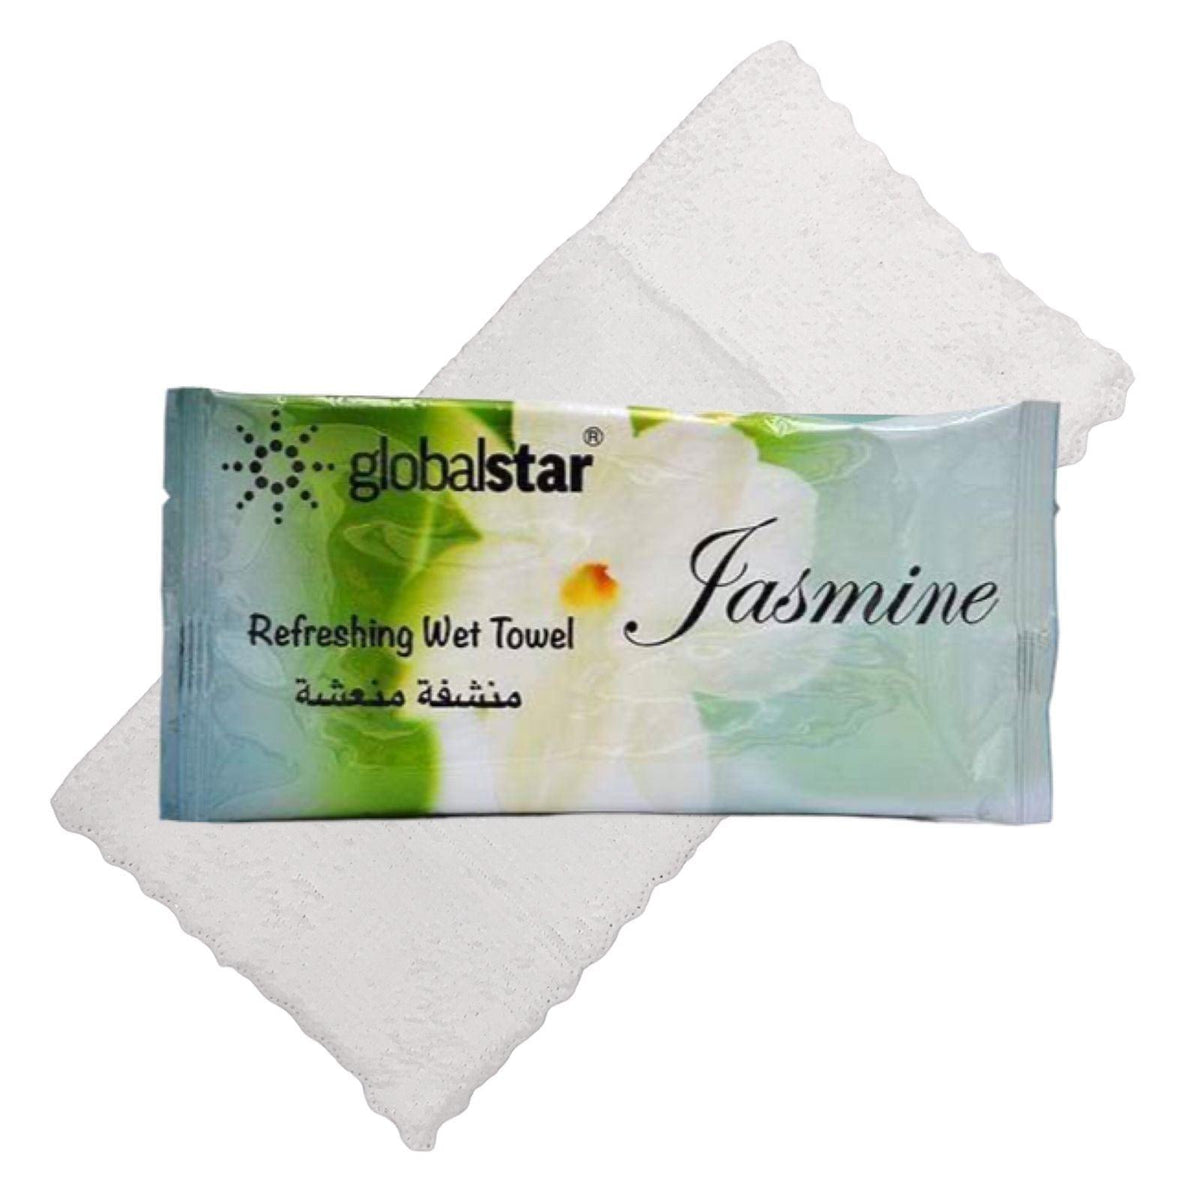 Globalstar Refreshing Wet Towel Jasmine 400pcs - RT03